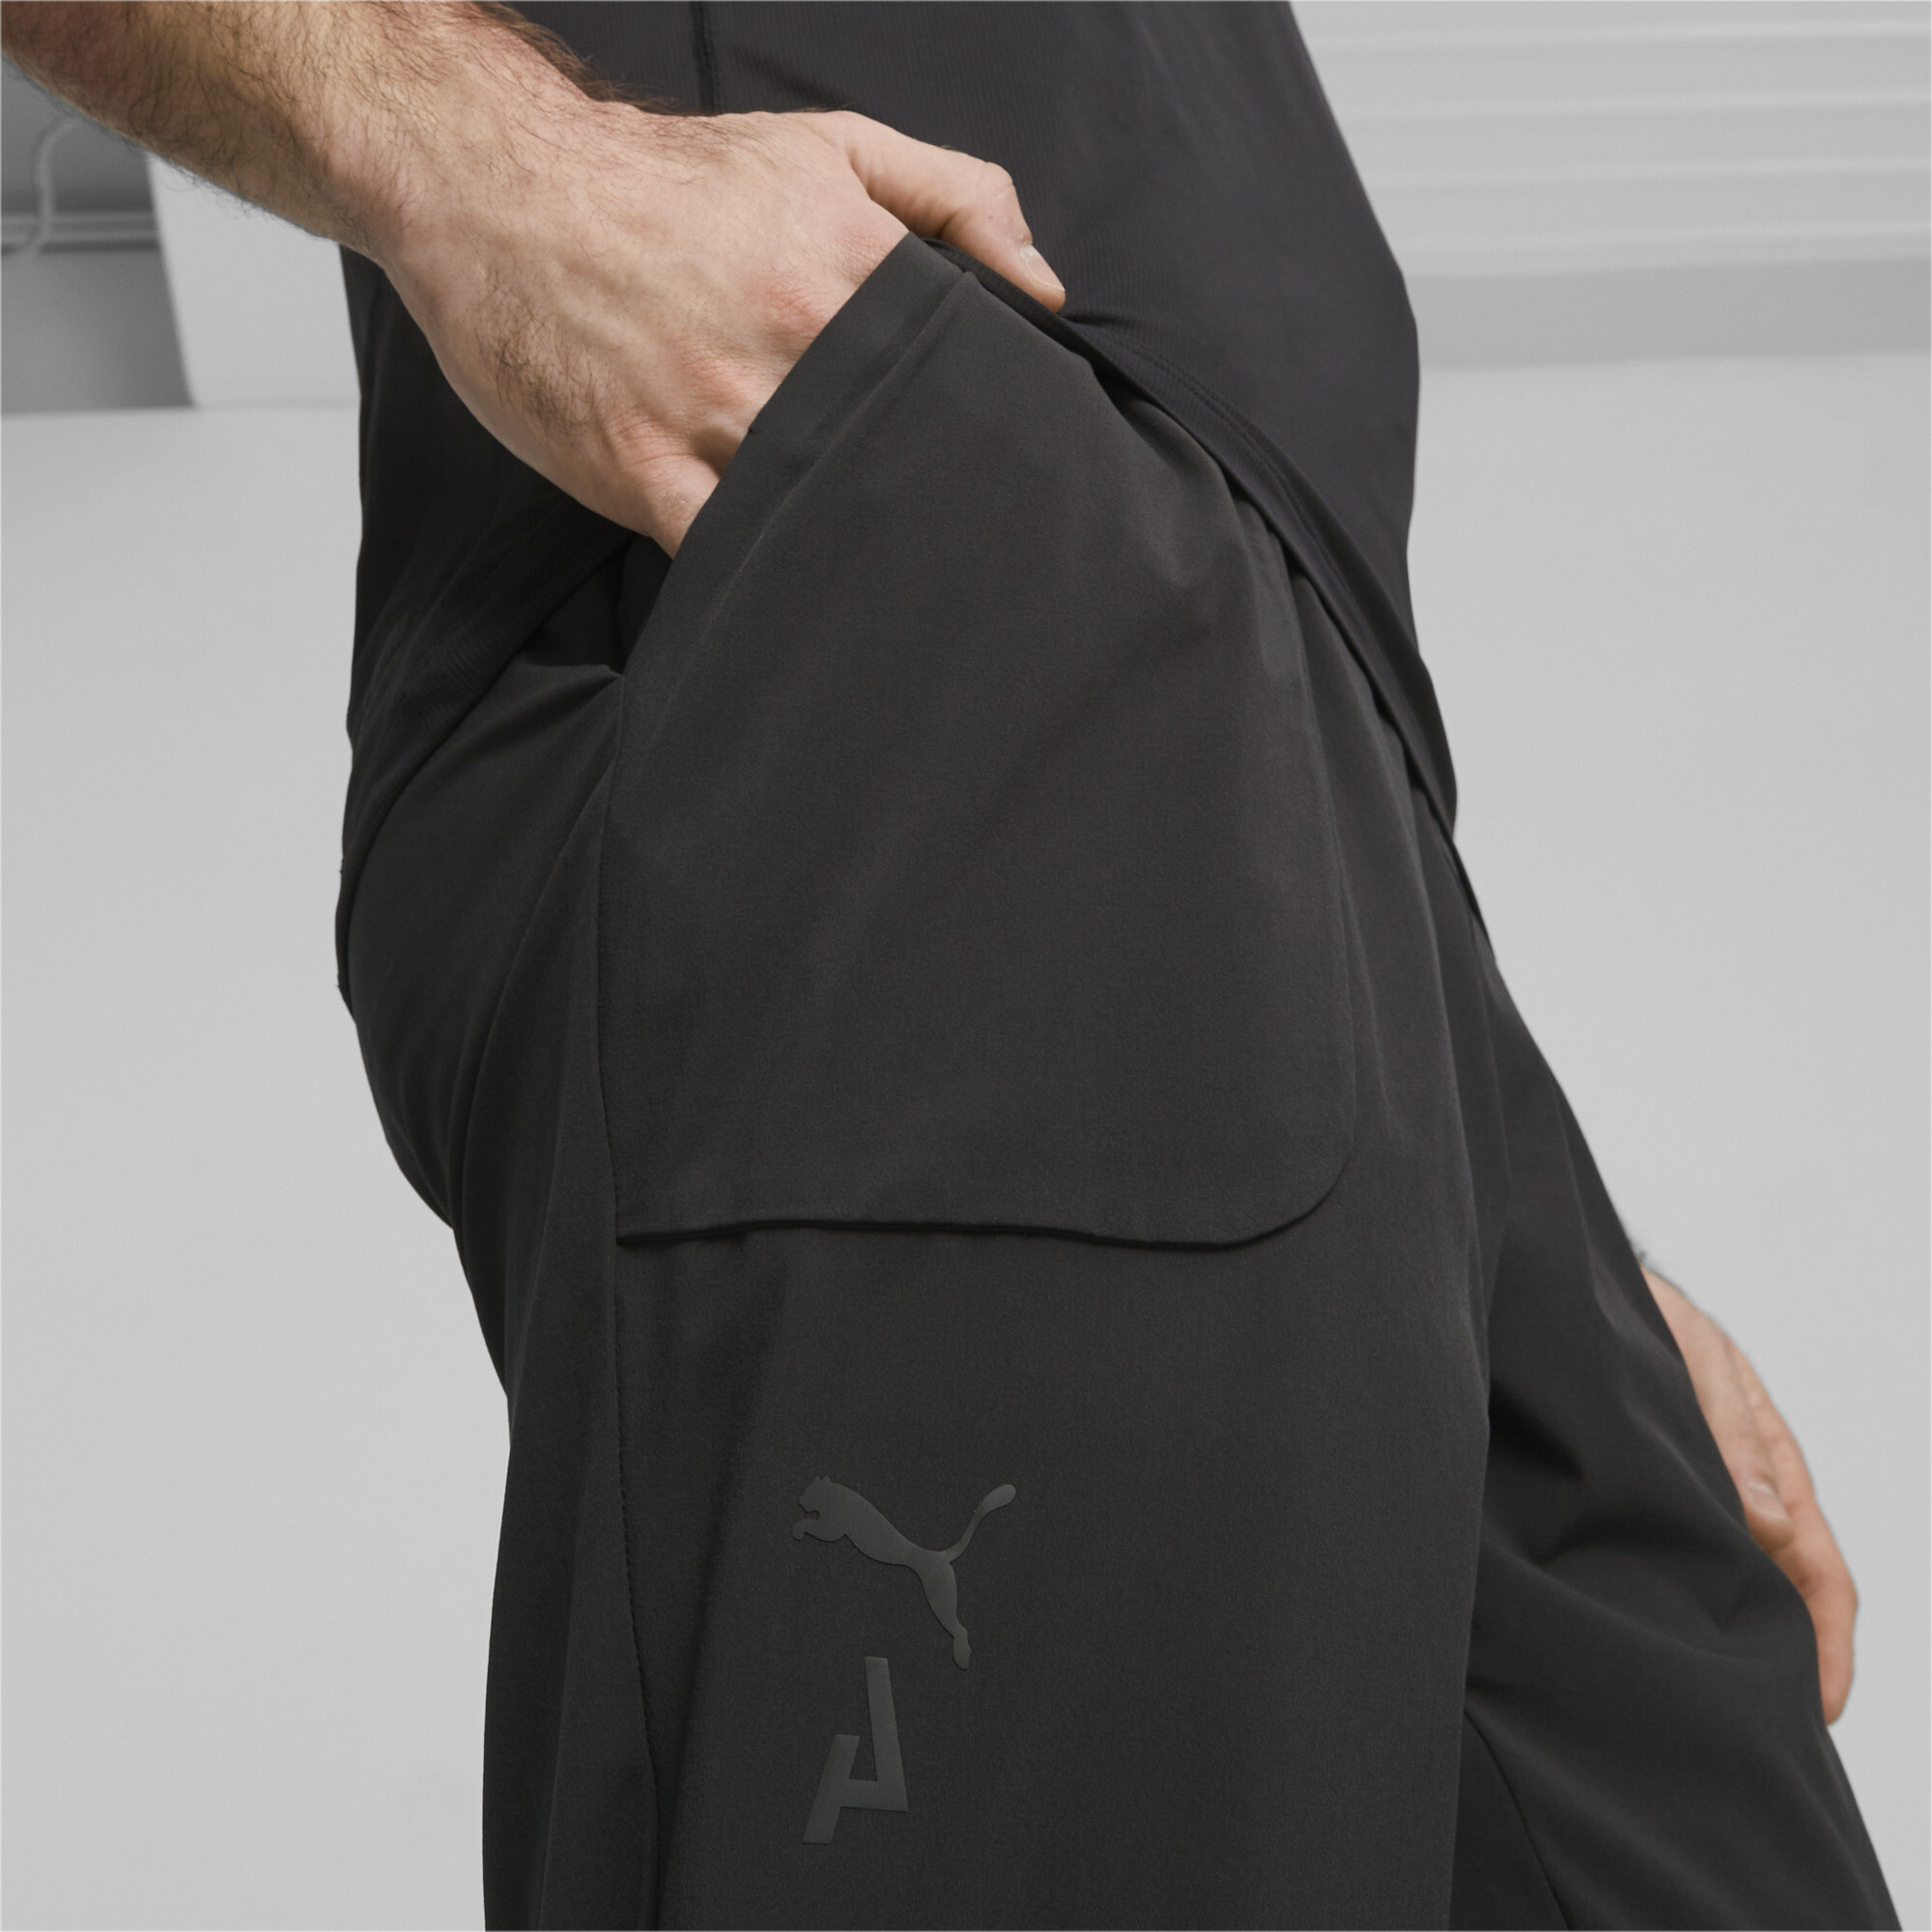 Men's PUMA SEASONS Lightweight Trail Running Pants In Black, Size Large